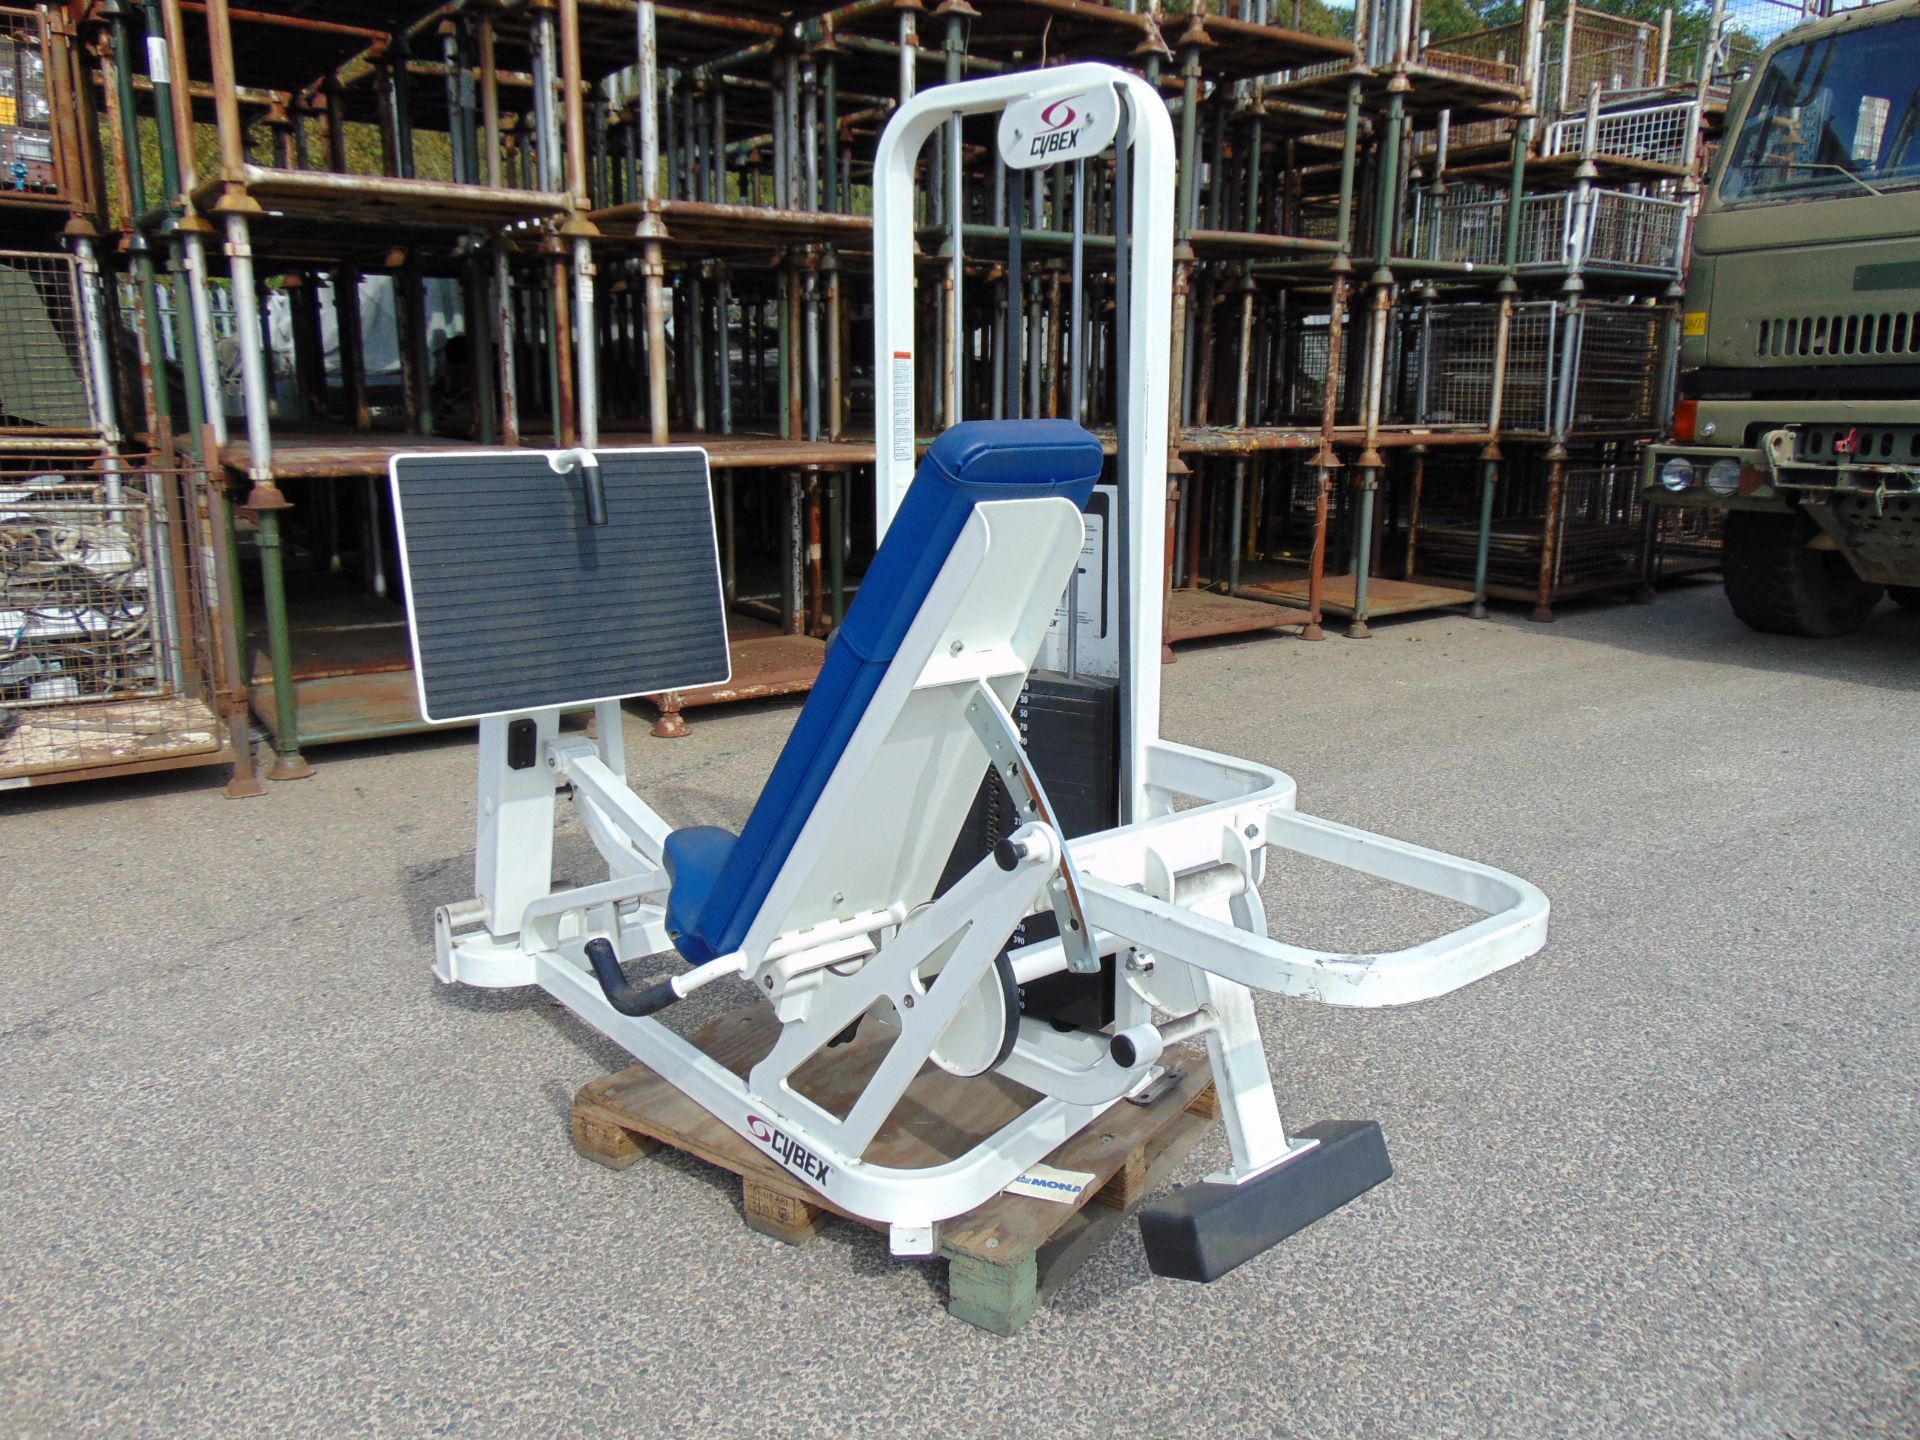 Cybex Seated Leg Press Exercise Machine - Image 3 of 10